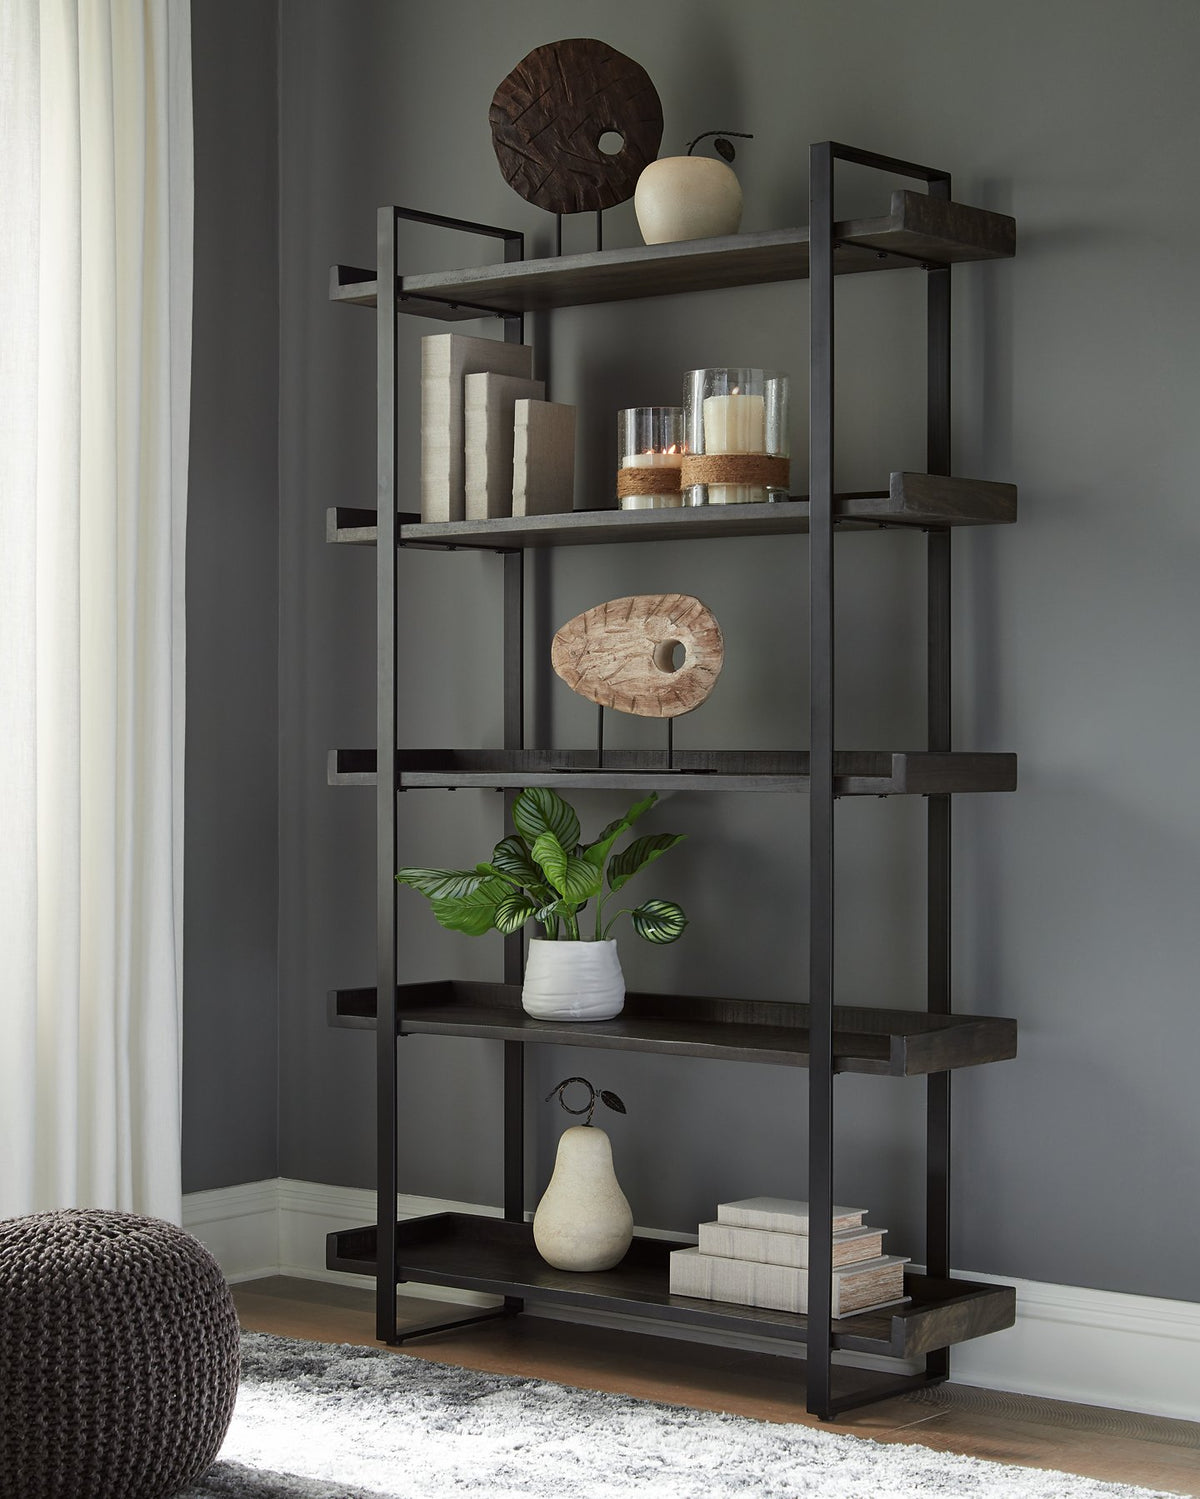 Kevmart Bookcase - Half Price Furniture